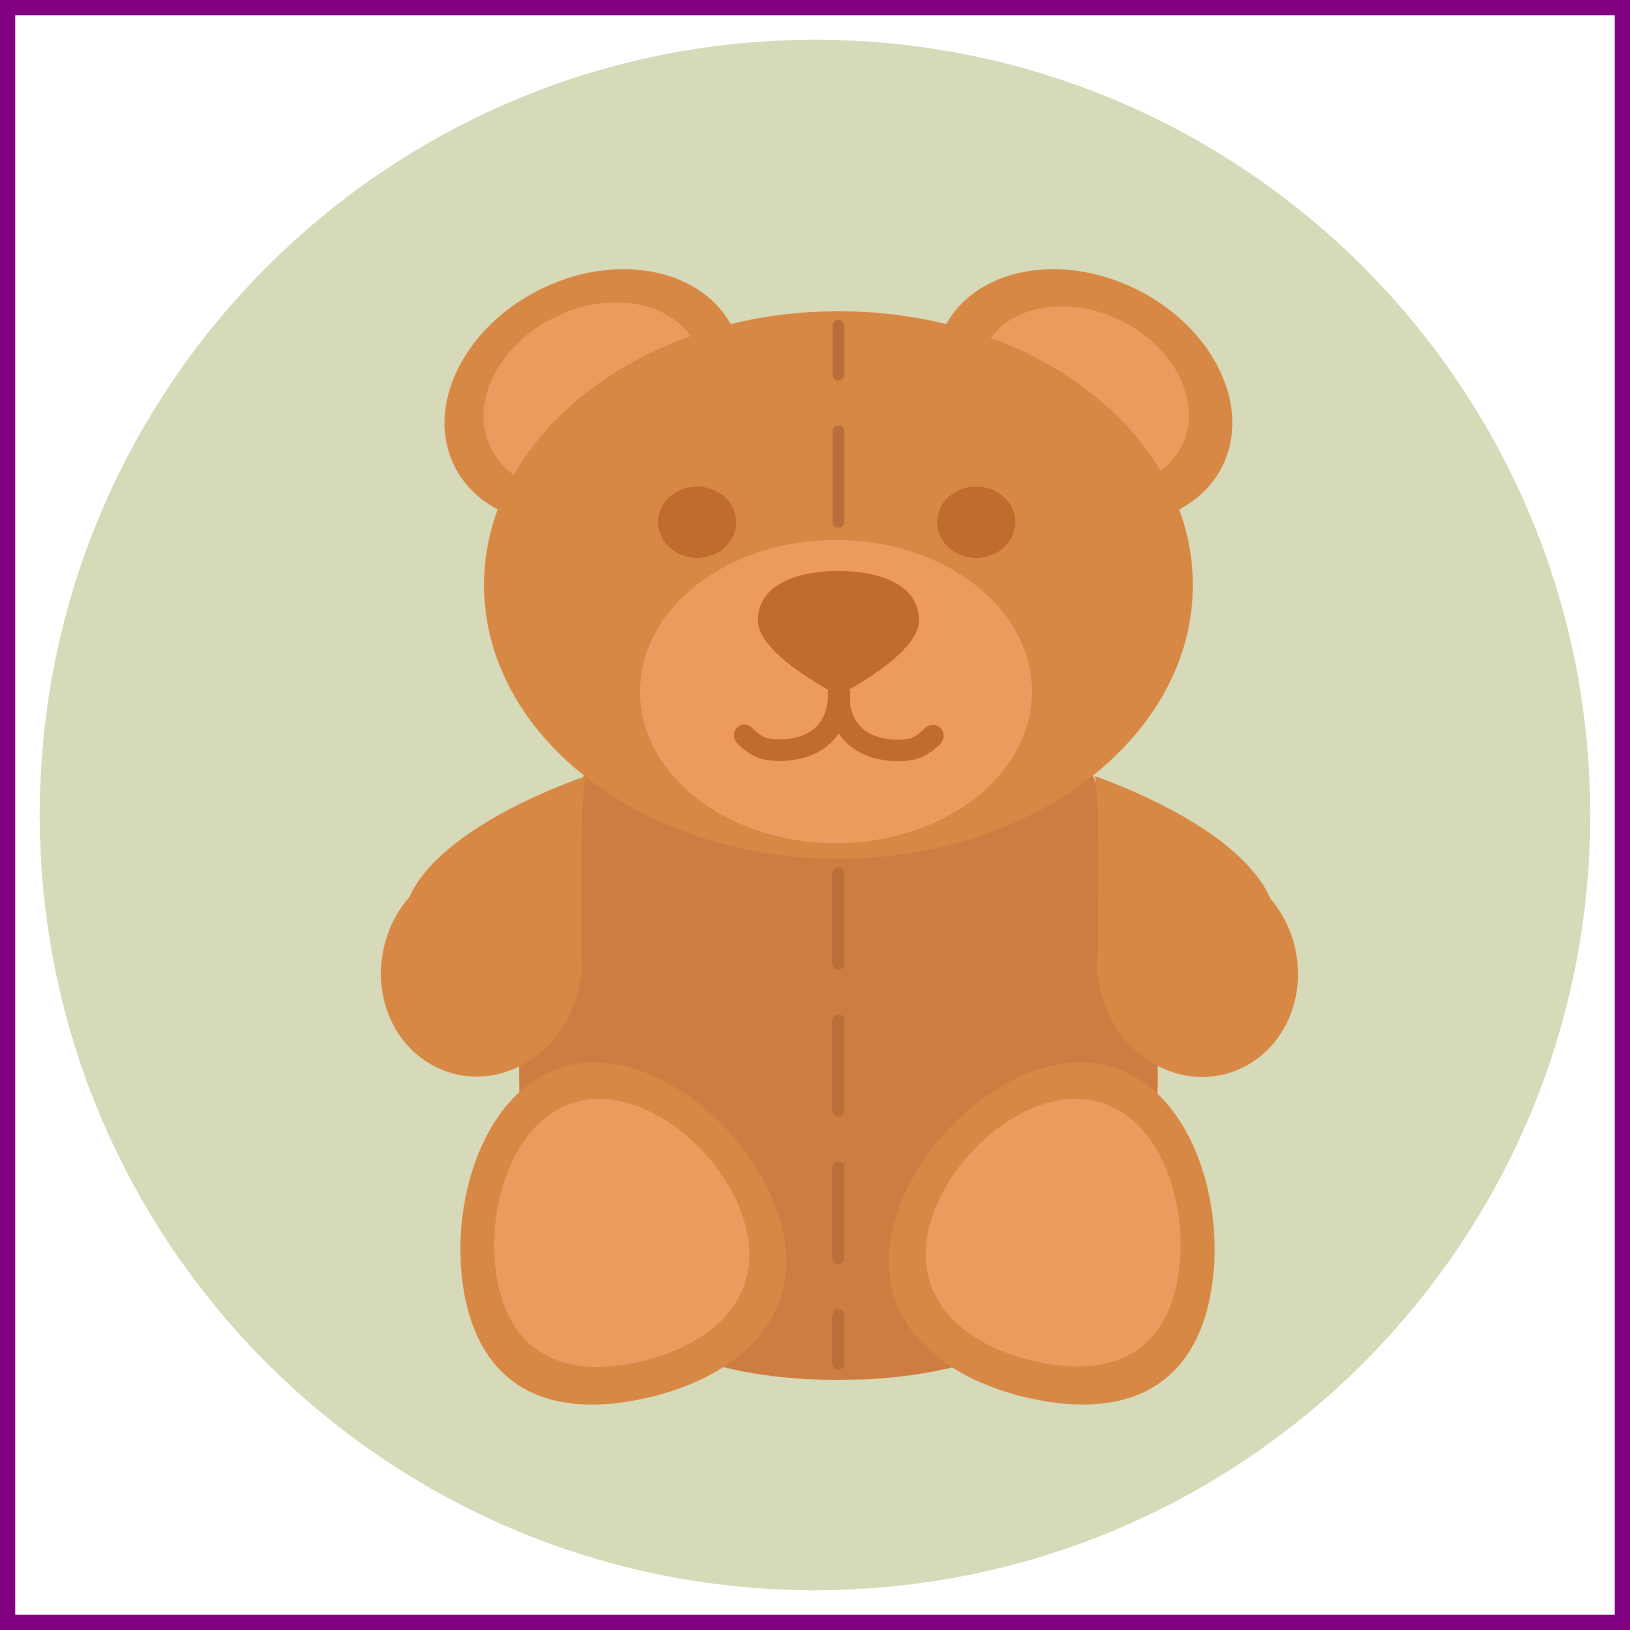 Astonishing Teddy Bear Icon Ths Image Is Of A Childs - Teddy Bear Flat Icon (1630x1630)